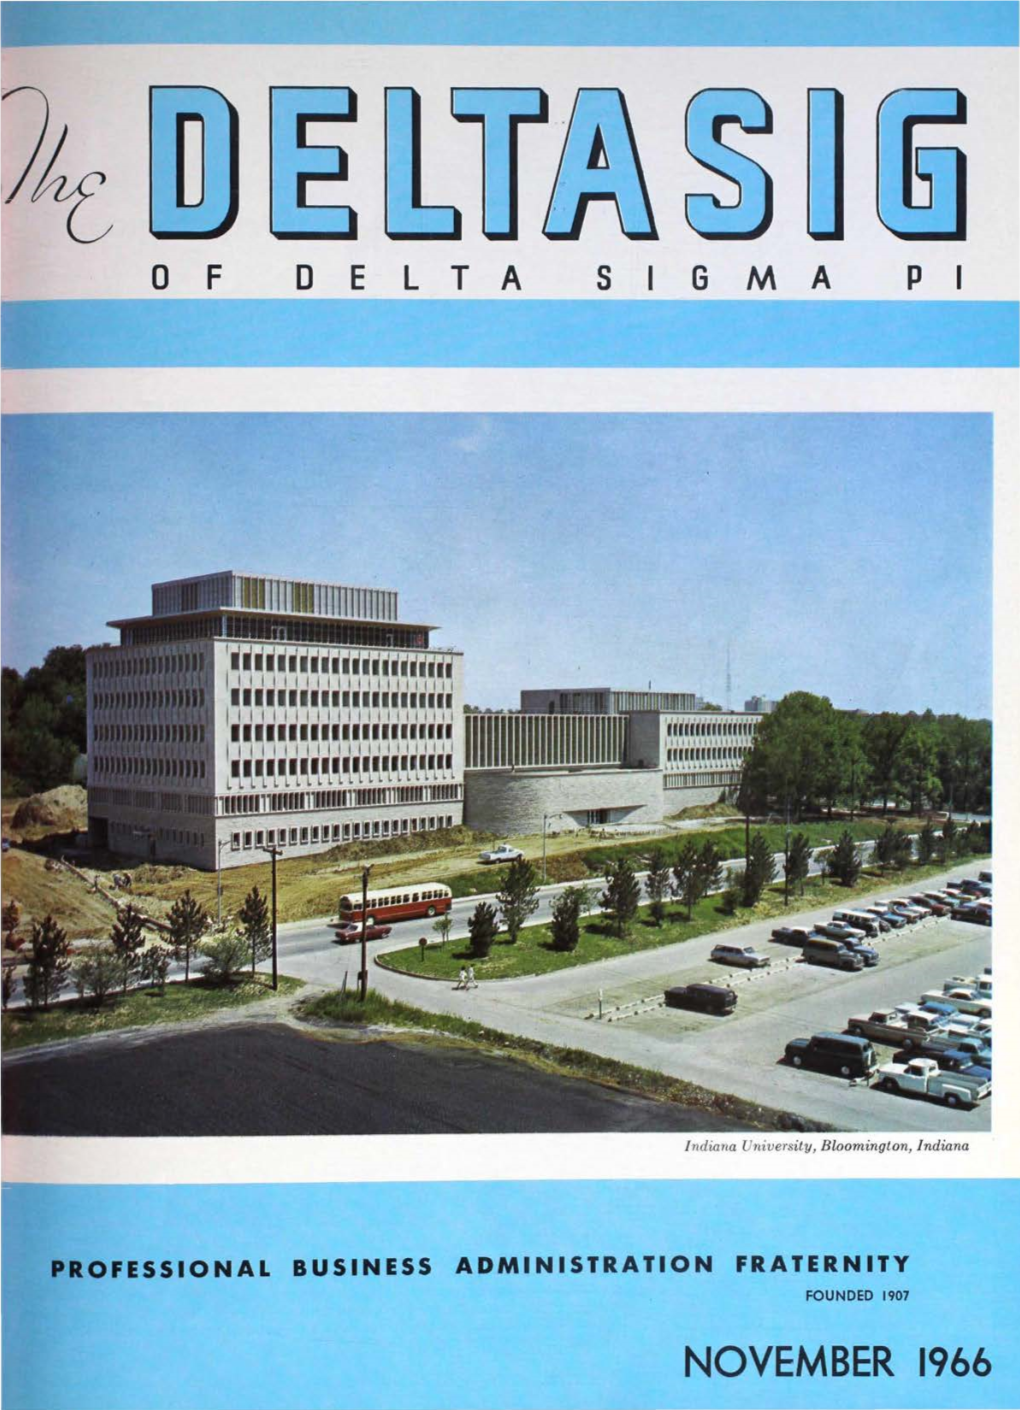 NOVEMBER 1966 the International Fraternity of Delta Sigma Pi